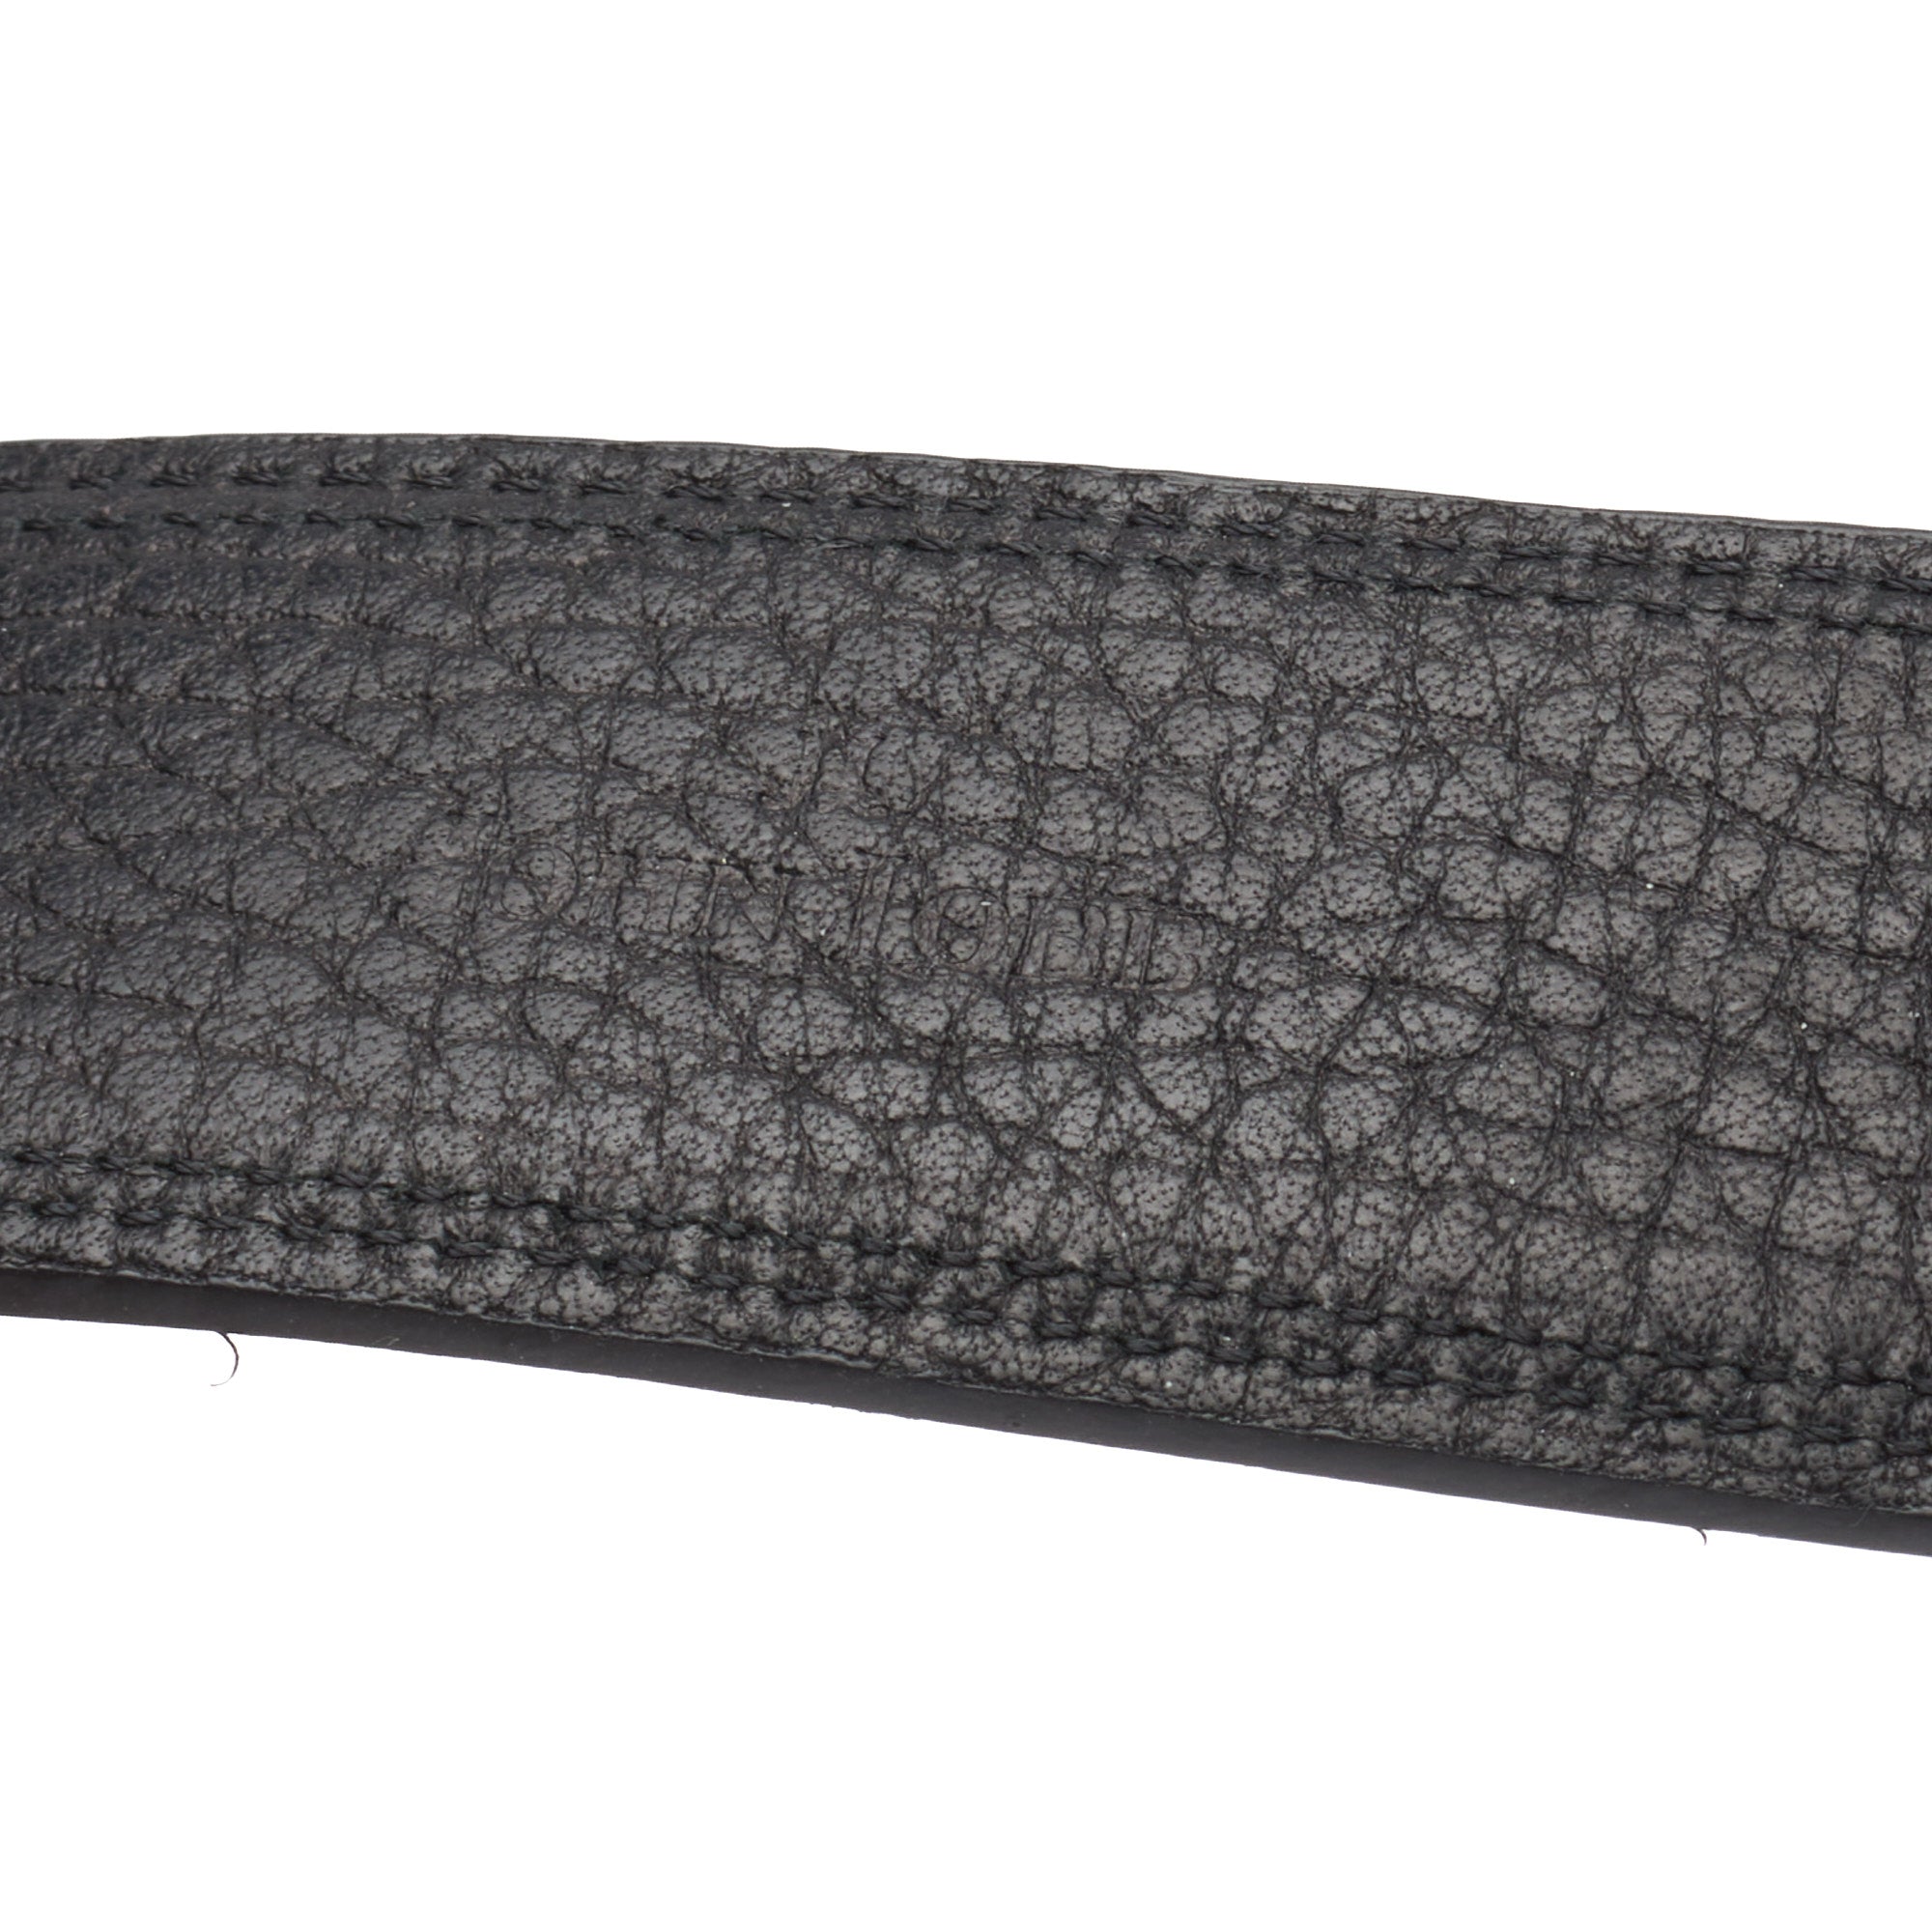 JOHN LOBB Handmade Black Calf Leather Belt with Silver-Tone Buckle 90cm 36" JOHN LOBB